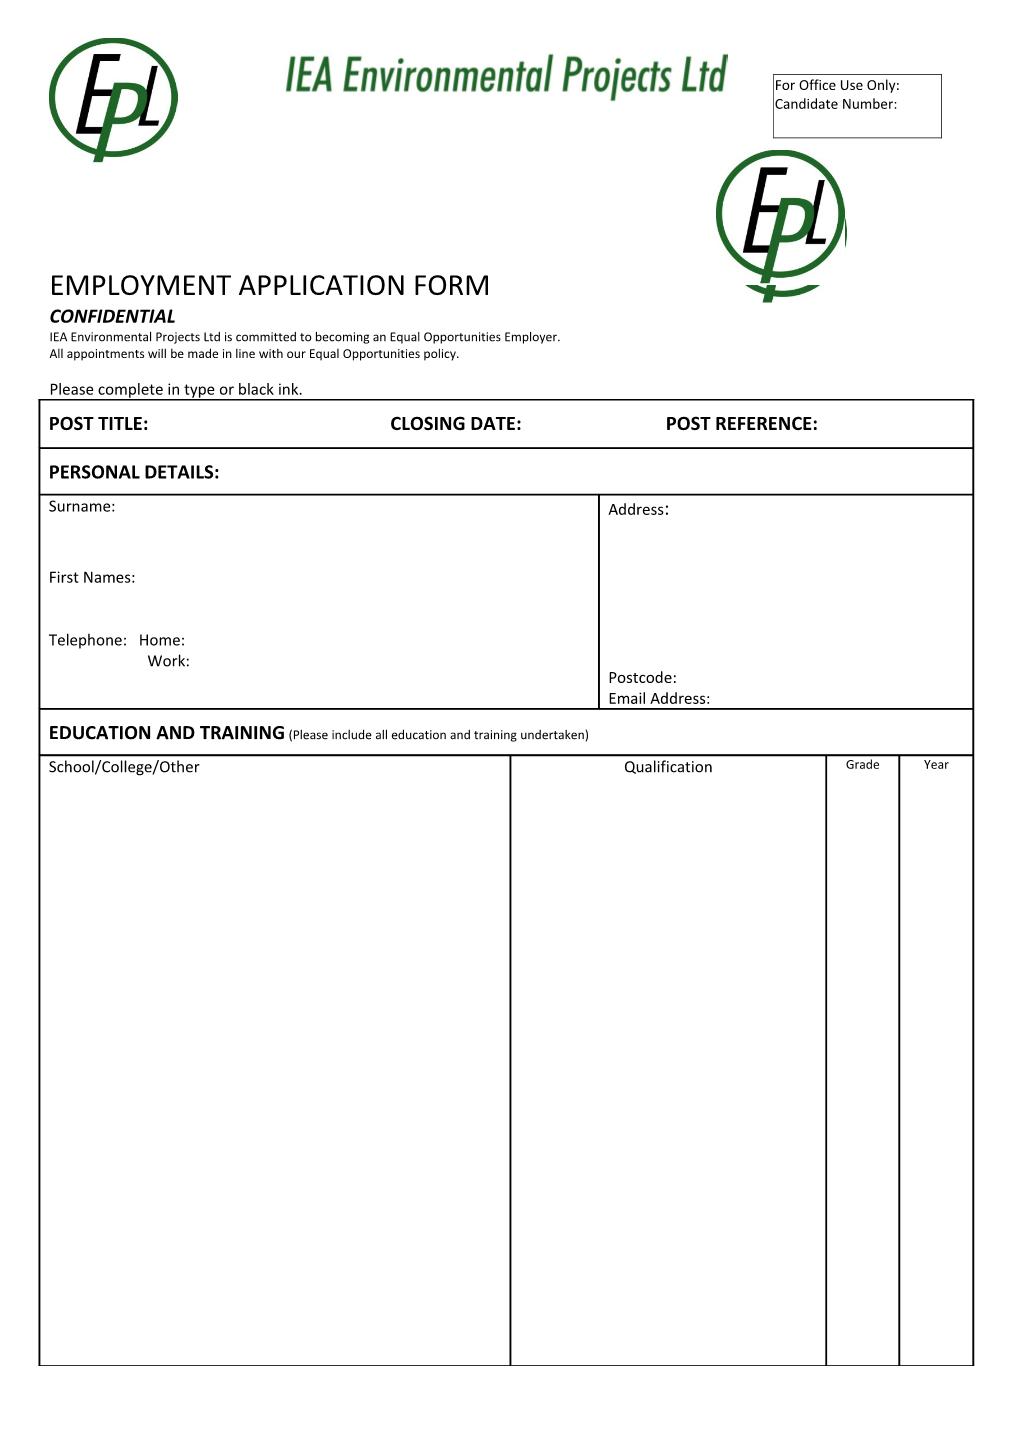 Employment Application Form (General)